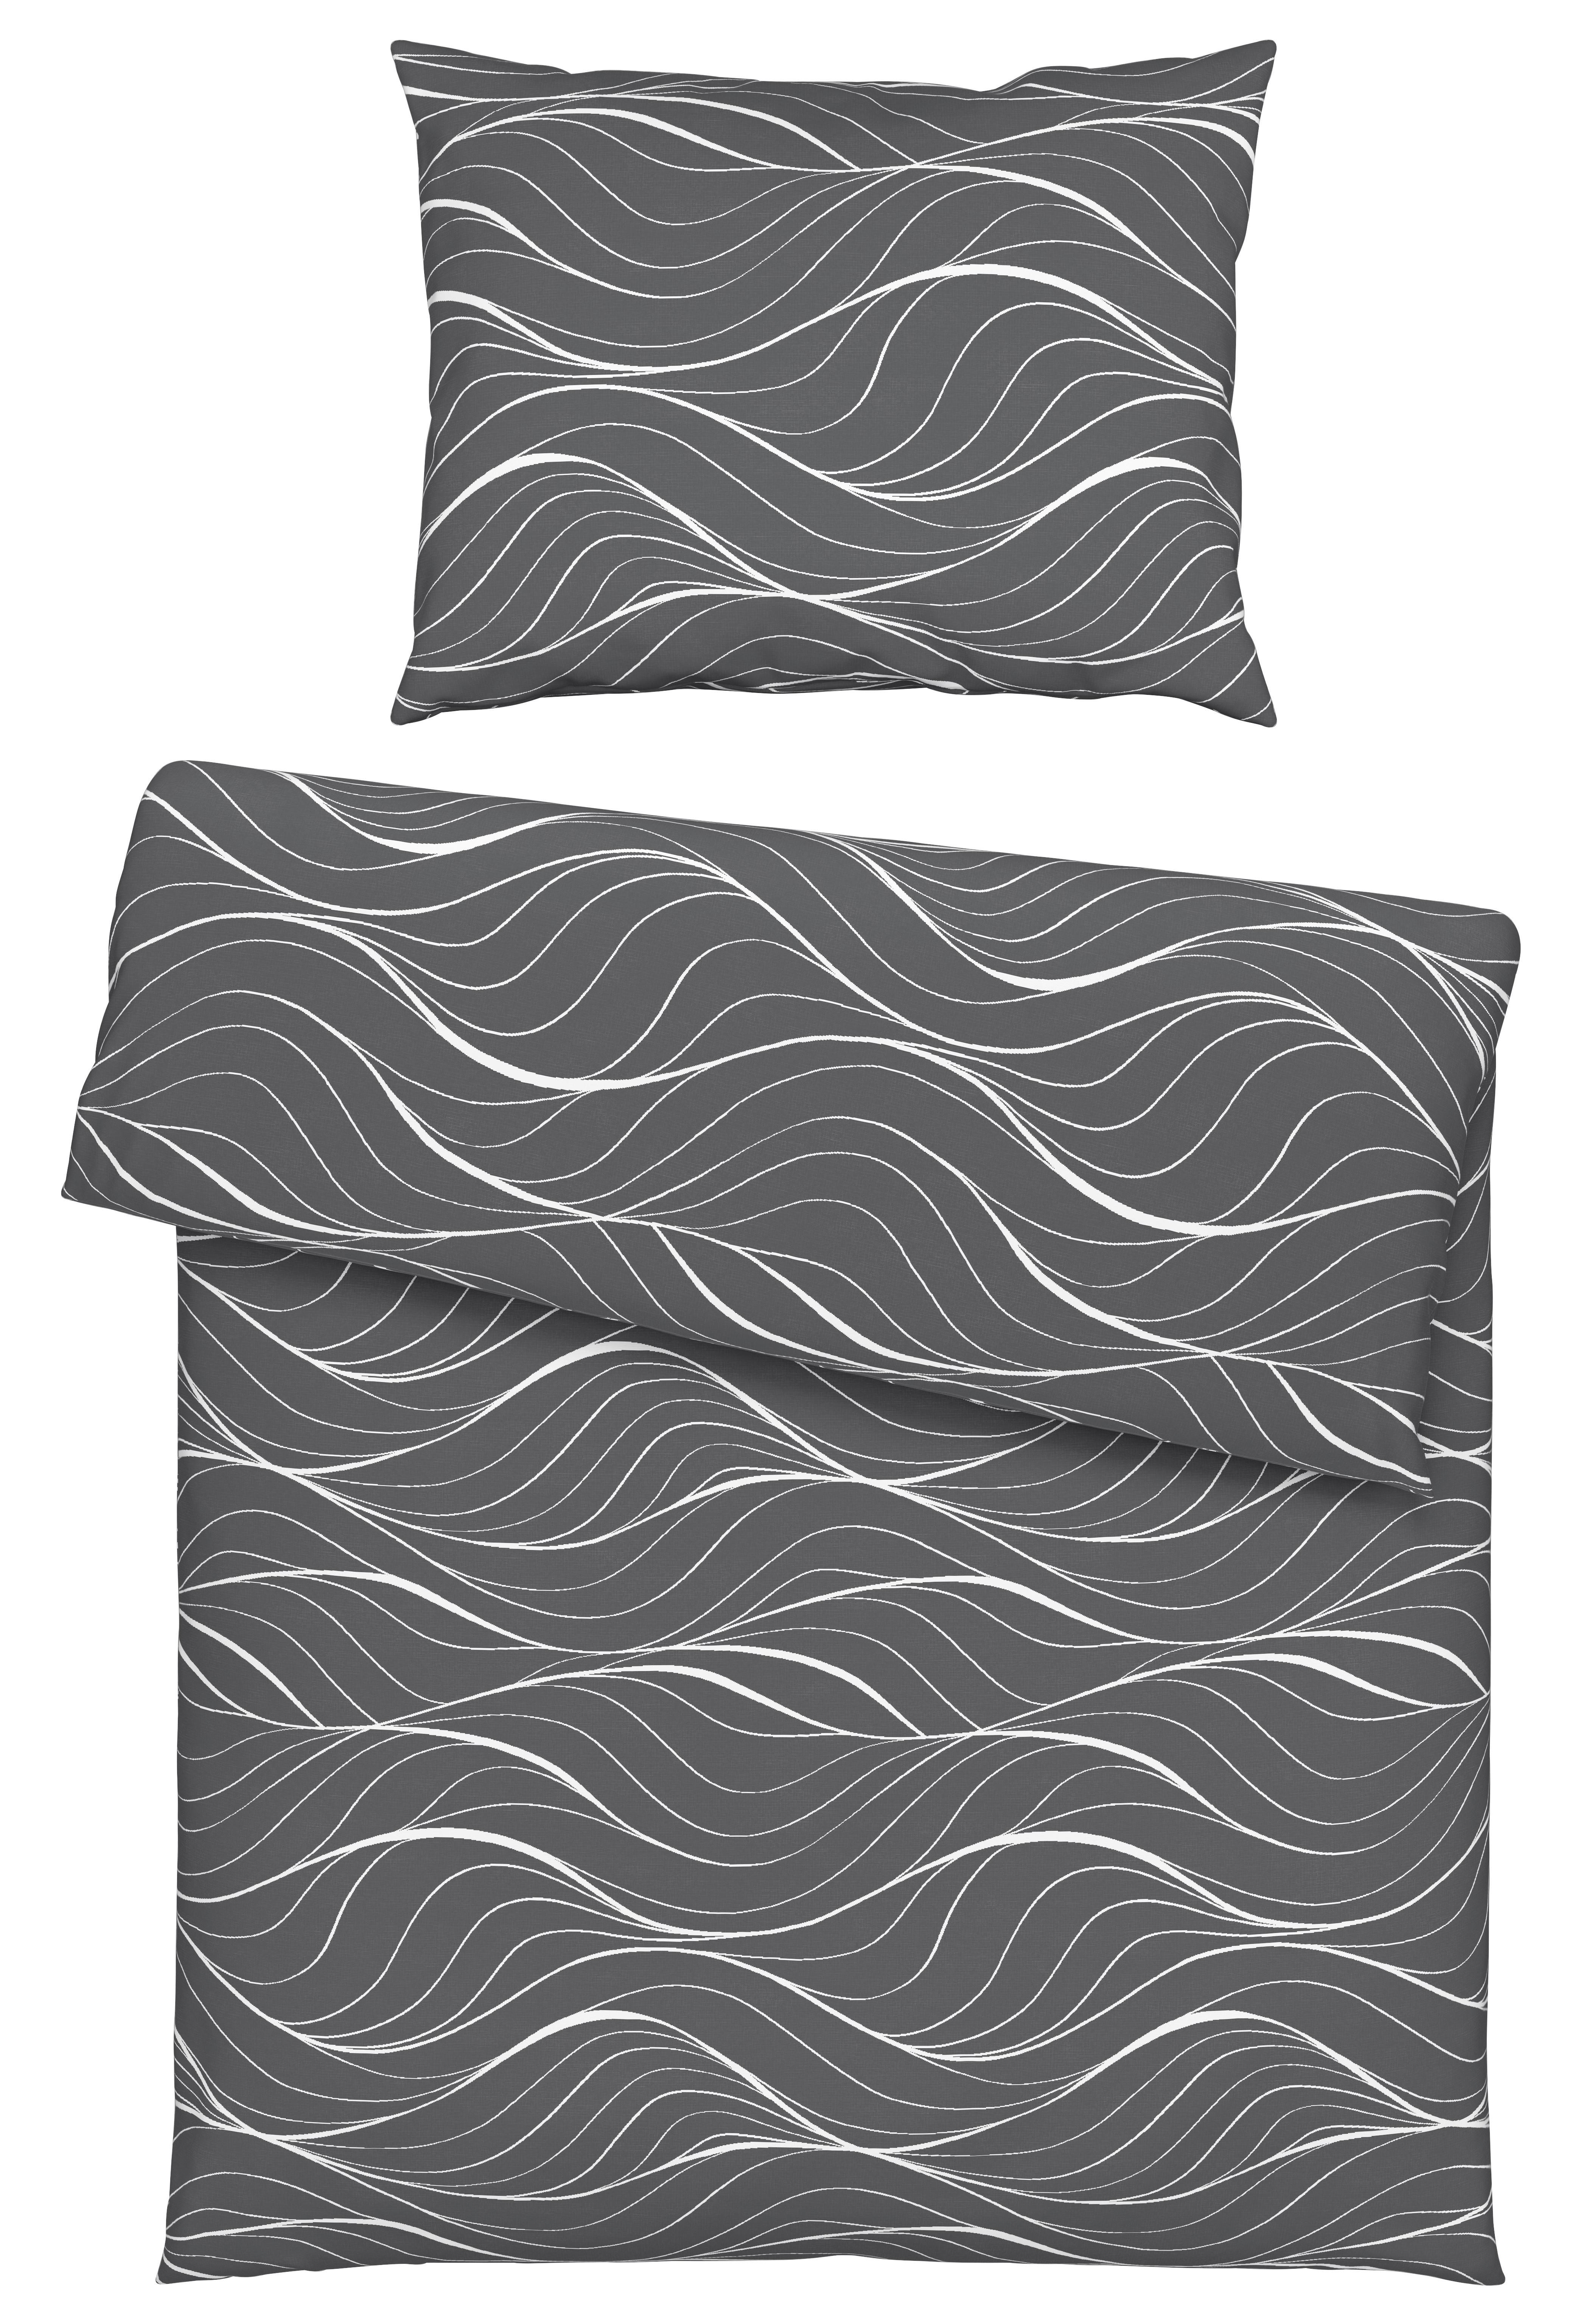 Posteľná Bielizeň Waves, 70/90 140/200cm - antracitová, textil (140/200cm) - Modern Living